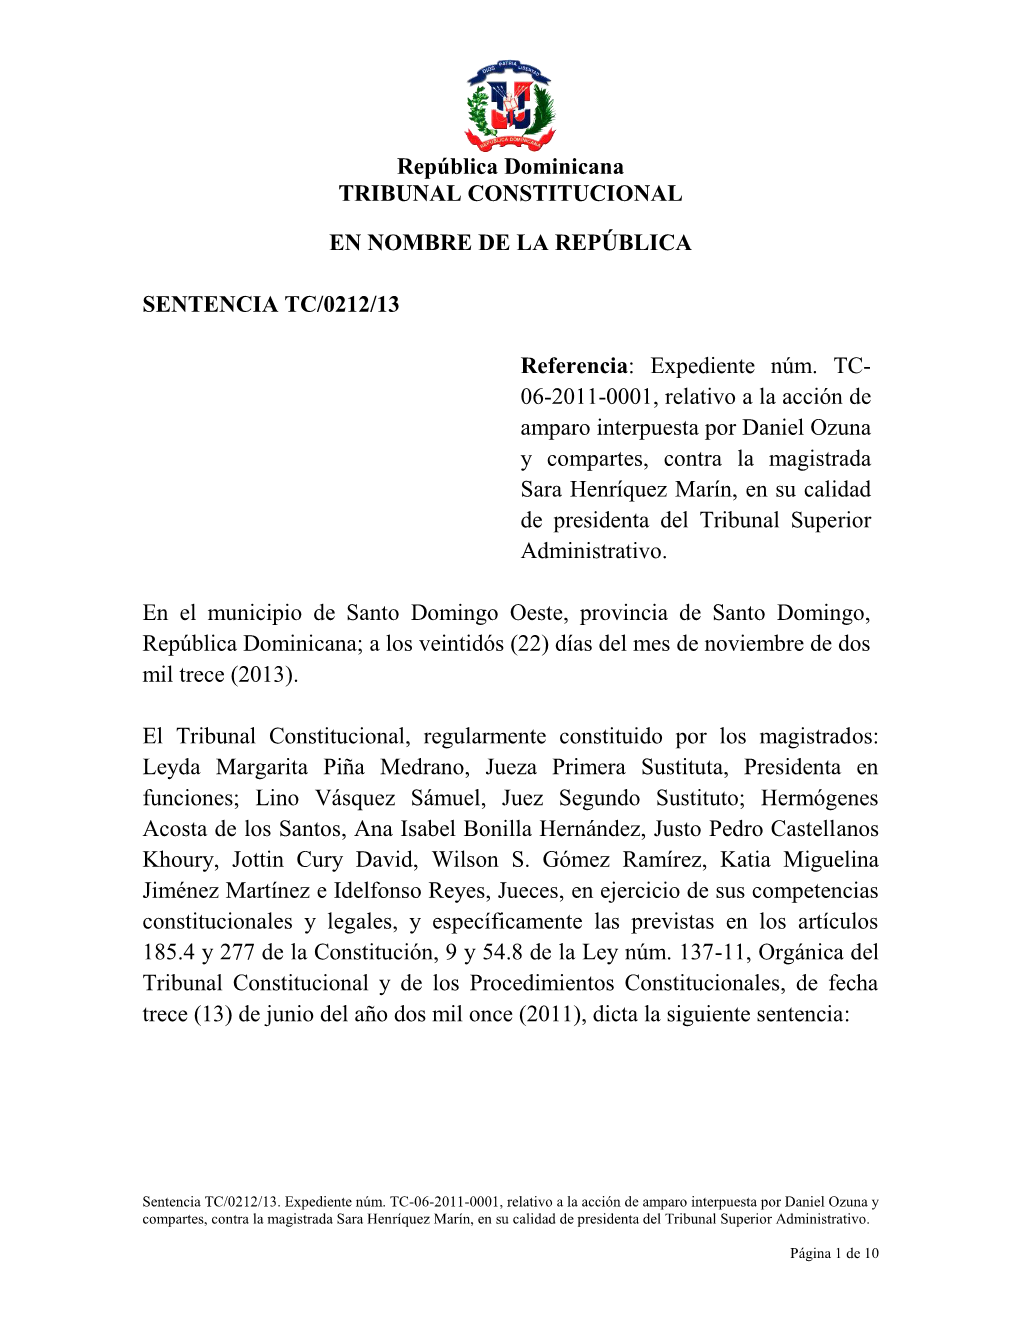 República Dominicana TRIBUNAL CONSTITUCIONAL EN NOMBRE DE LA REPÚBLICA SENTENCIA TC/0212/13 Referencia: Expediente Núm. TC- 0